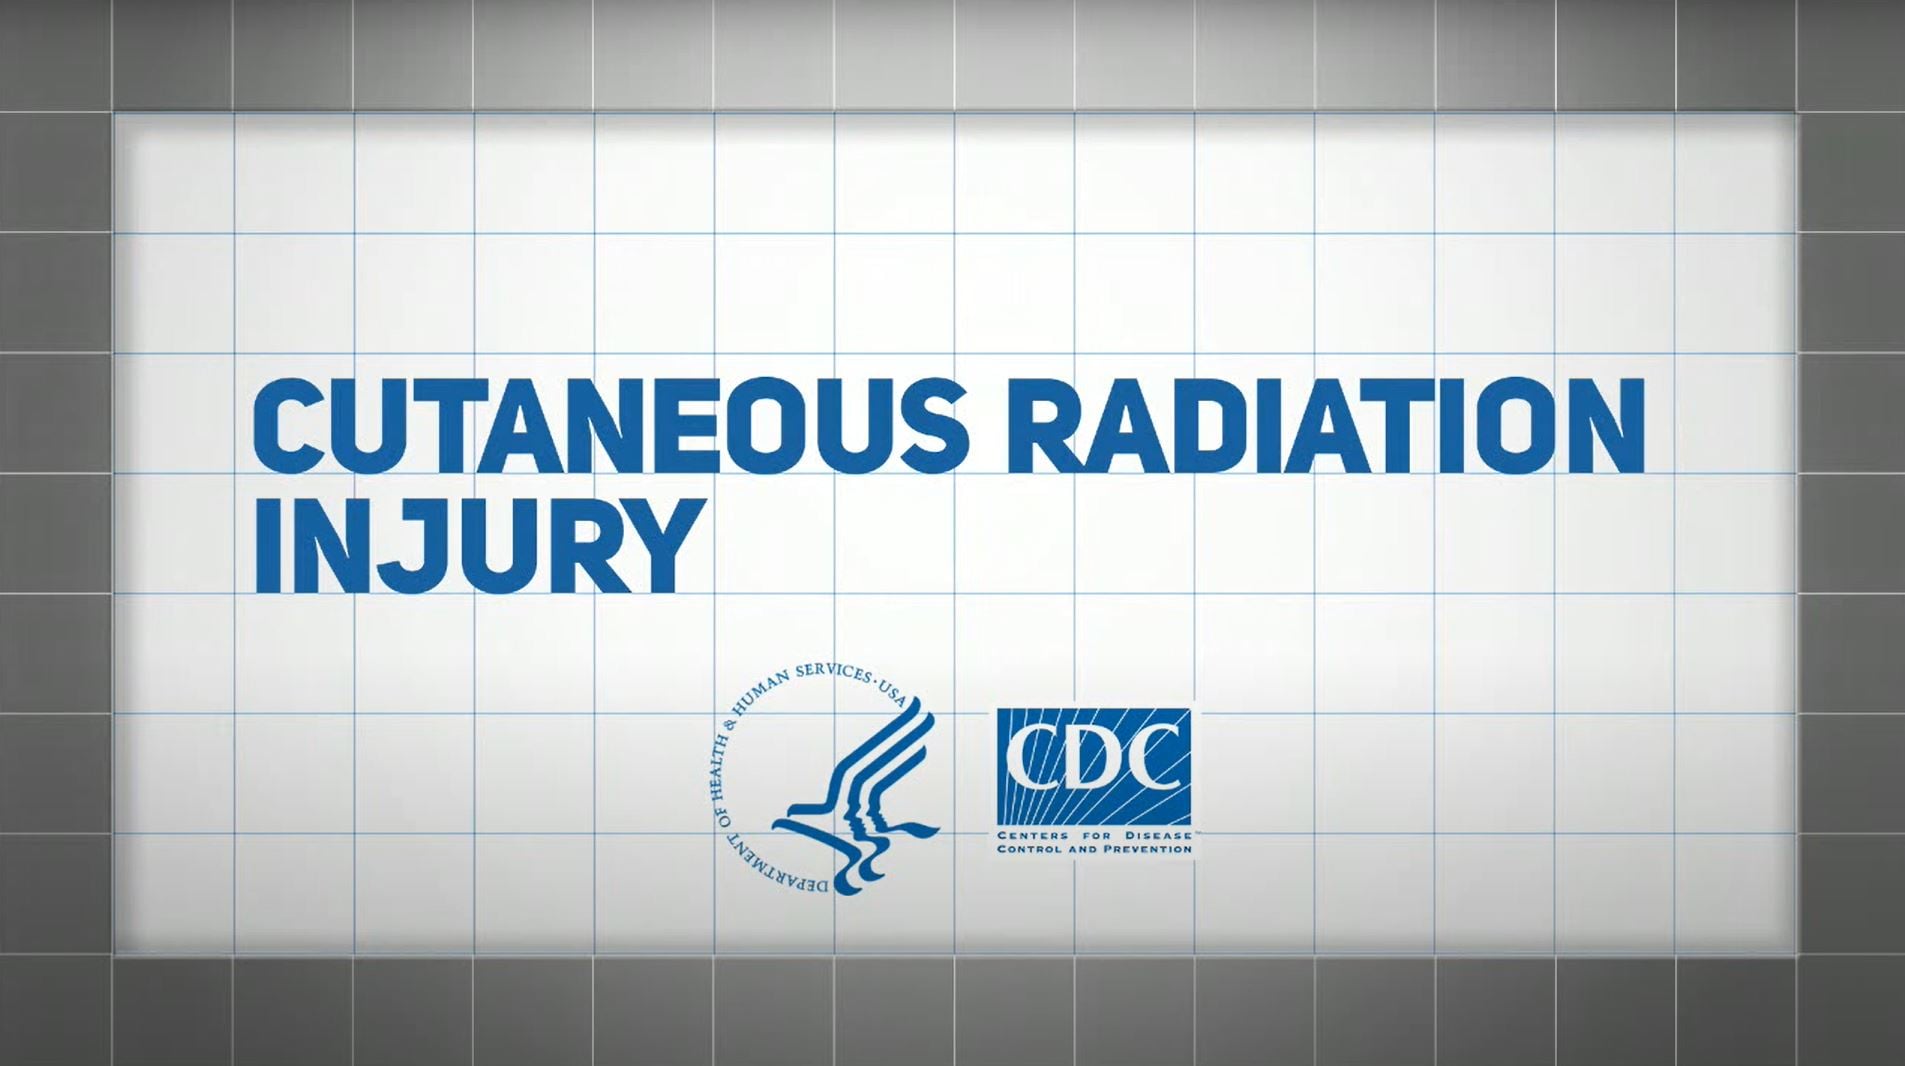 Banner displaying "Cutaneous Radiation Injury" with CDC logo